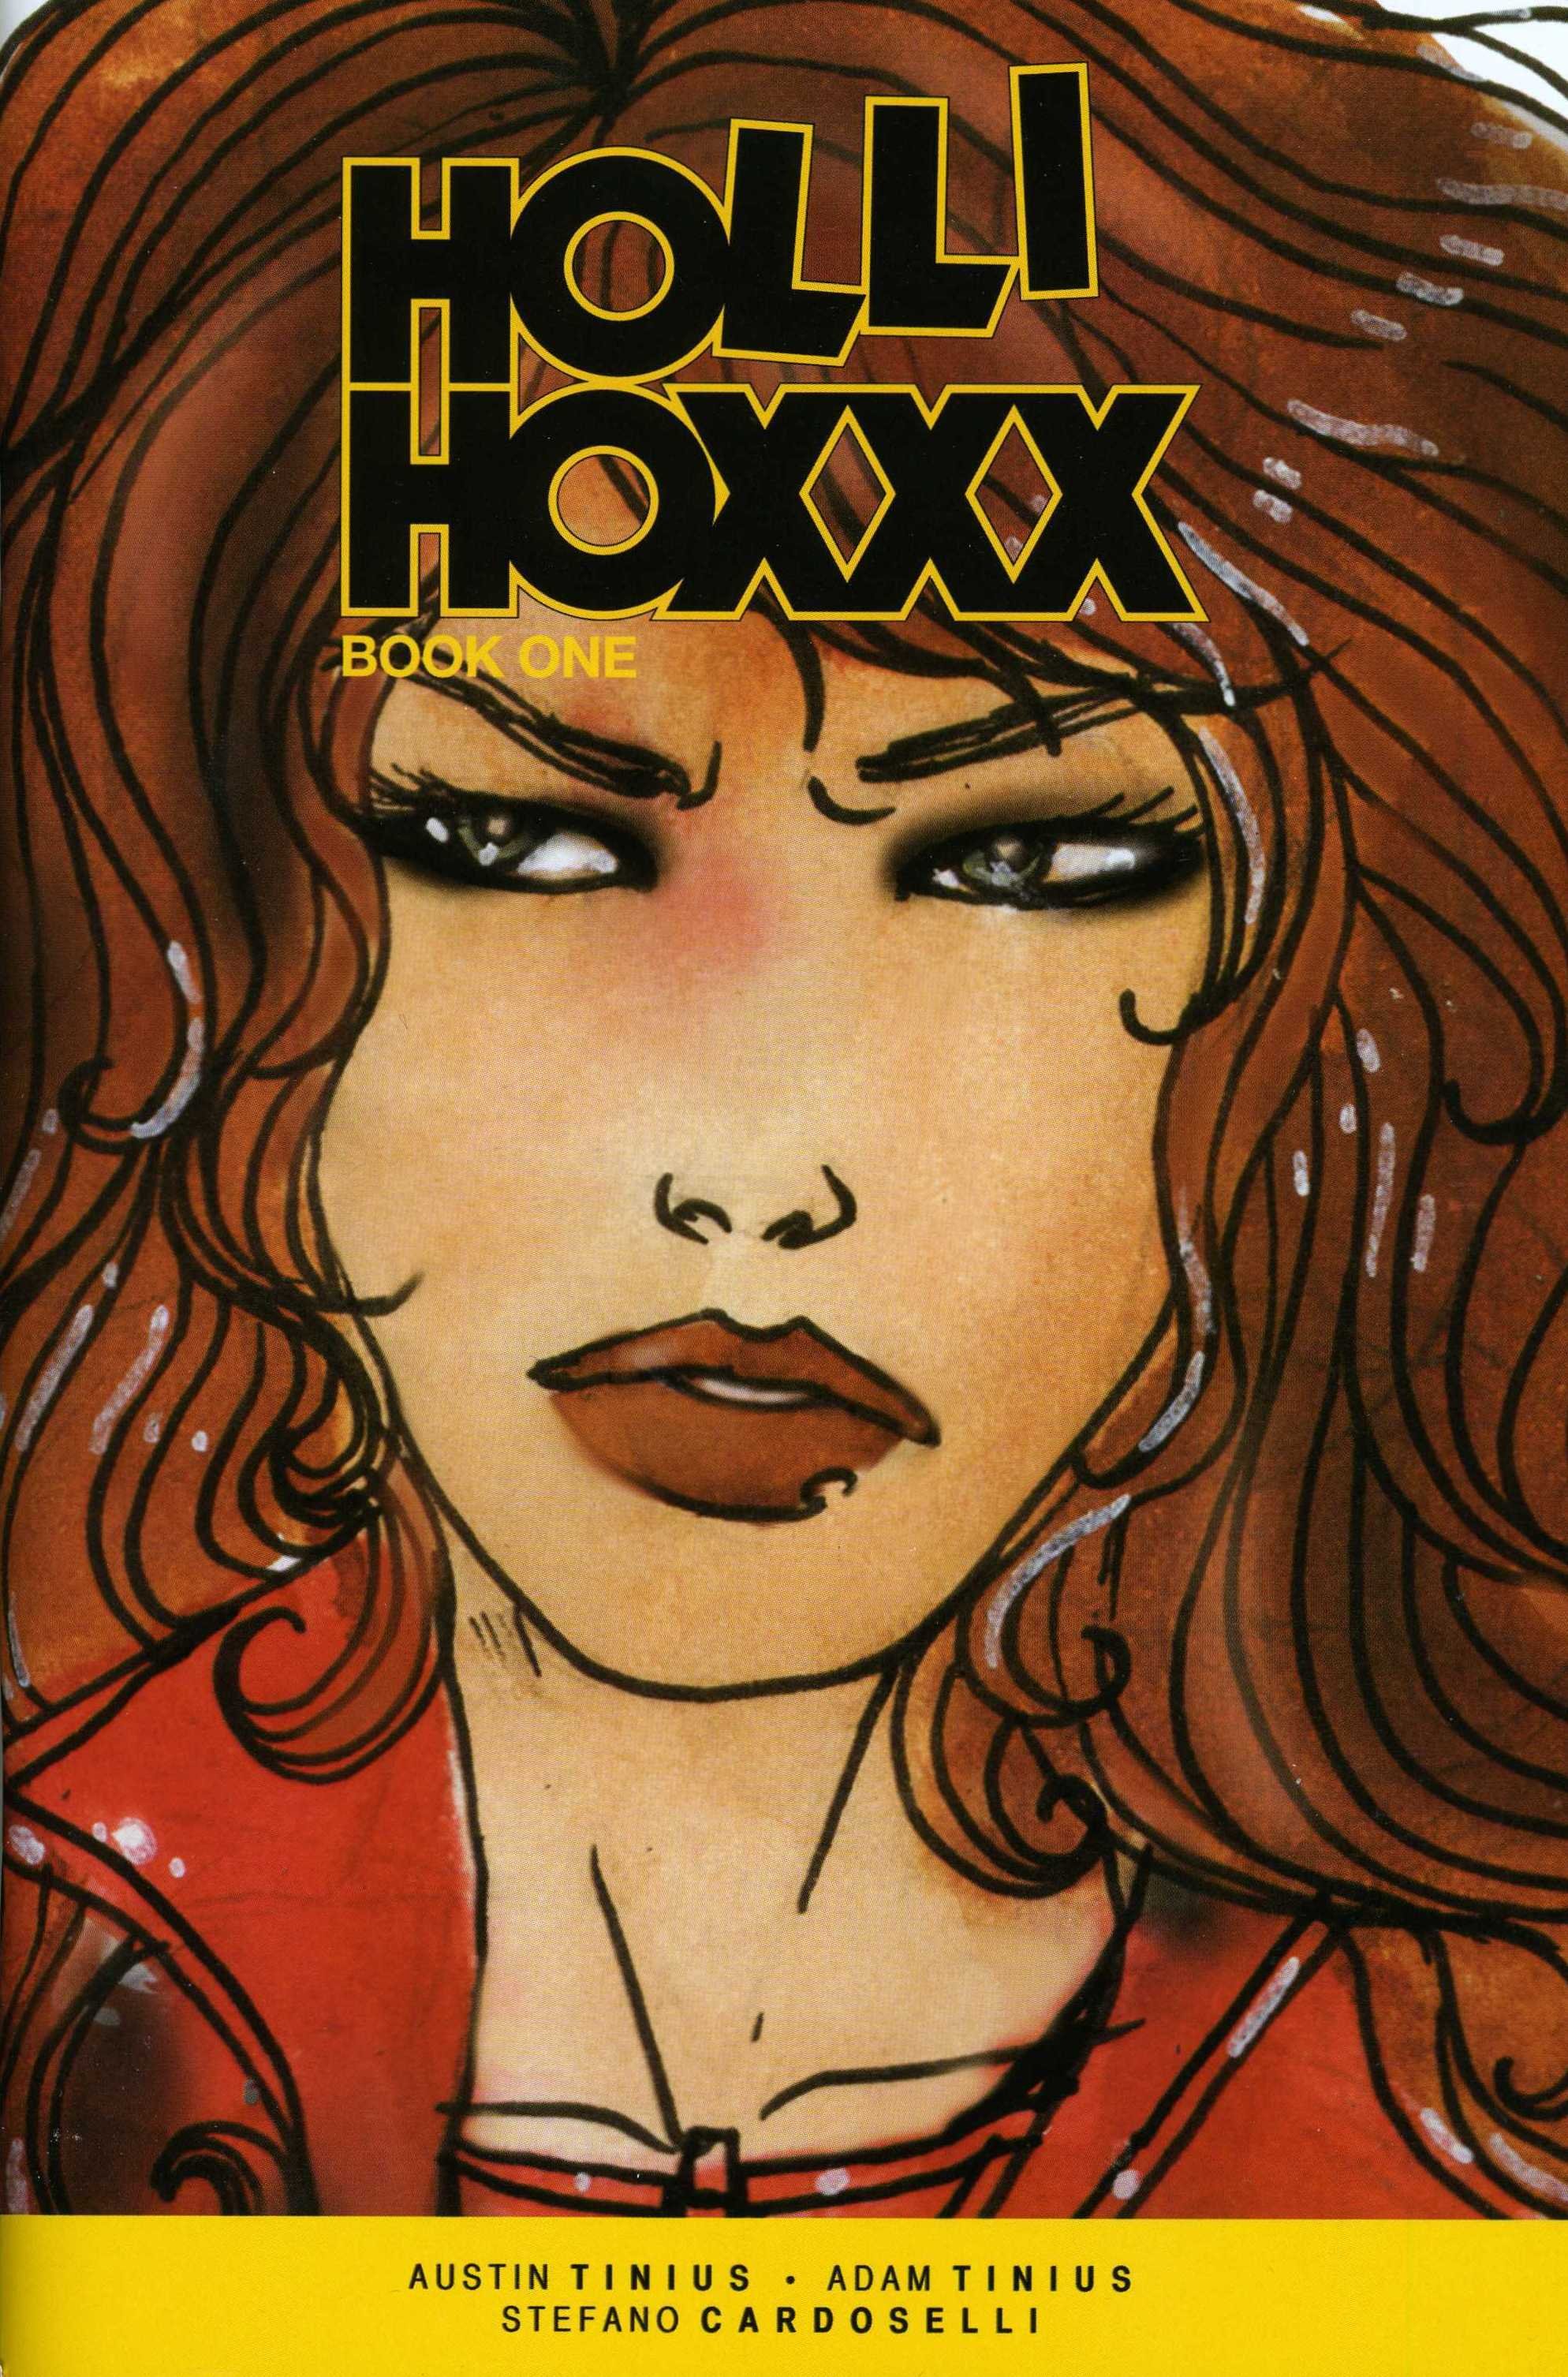 Holli Hoxxx #1 Cover